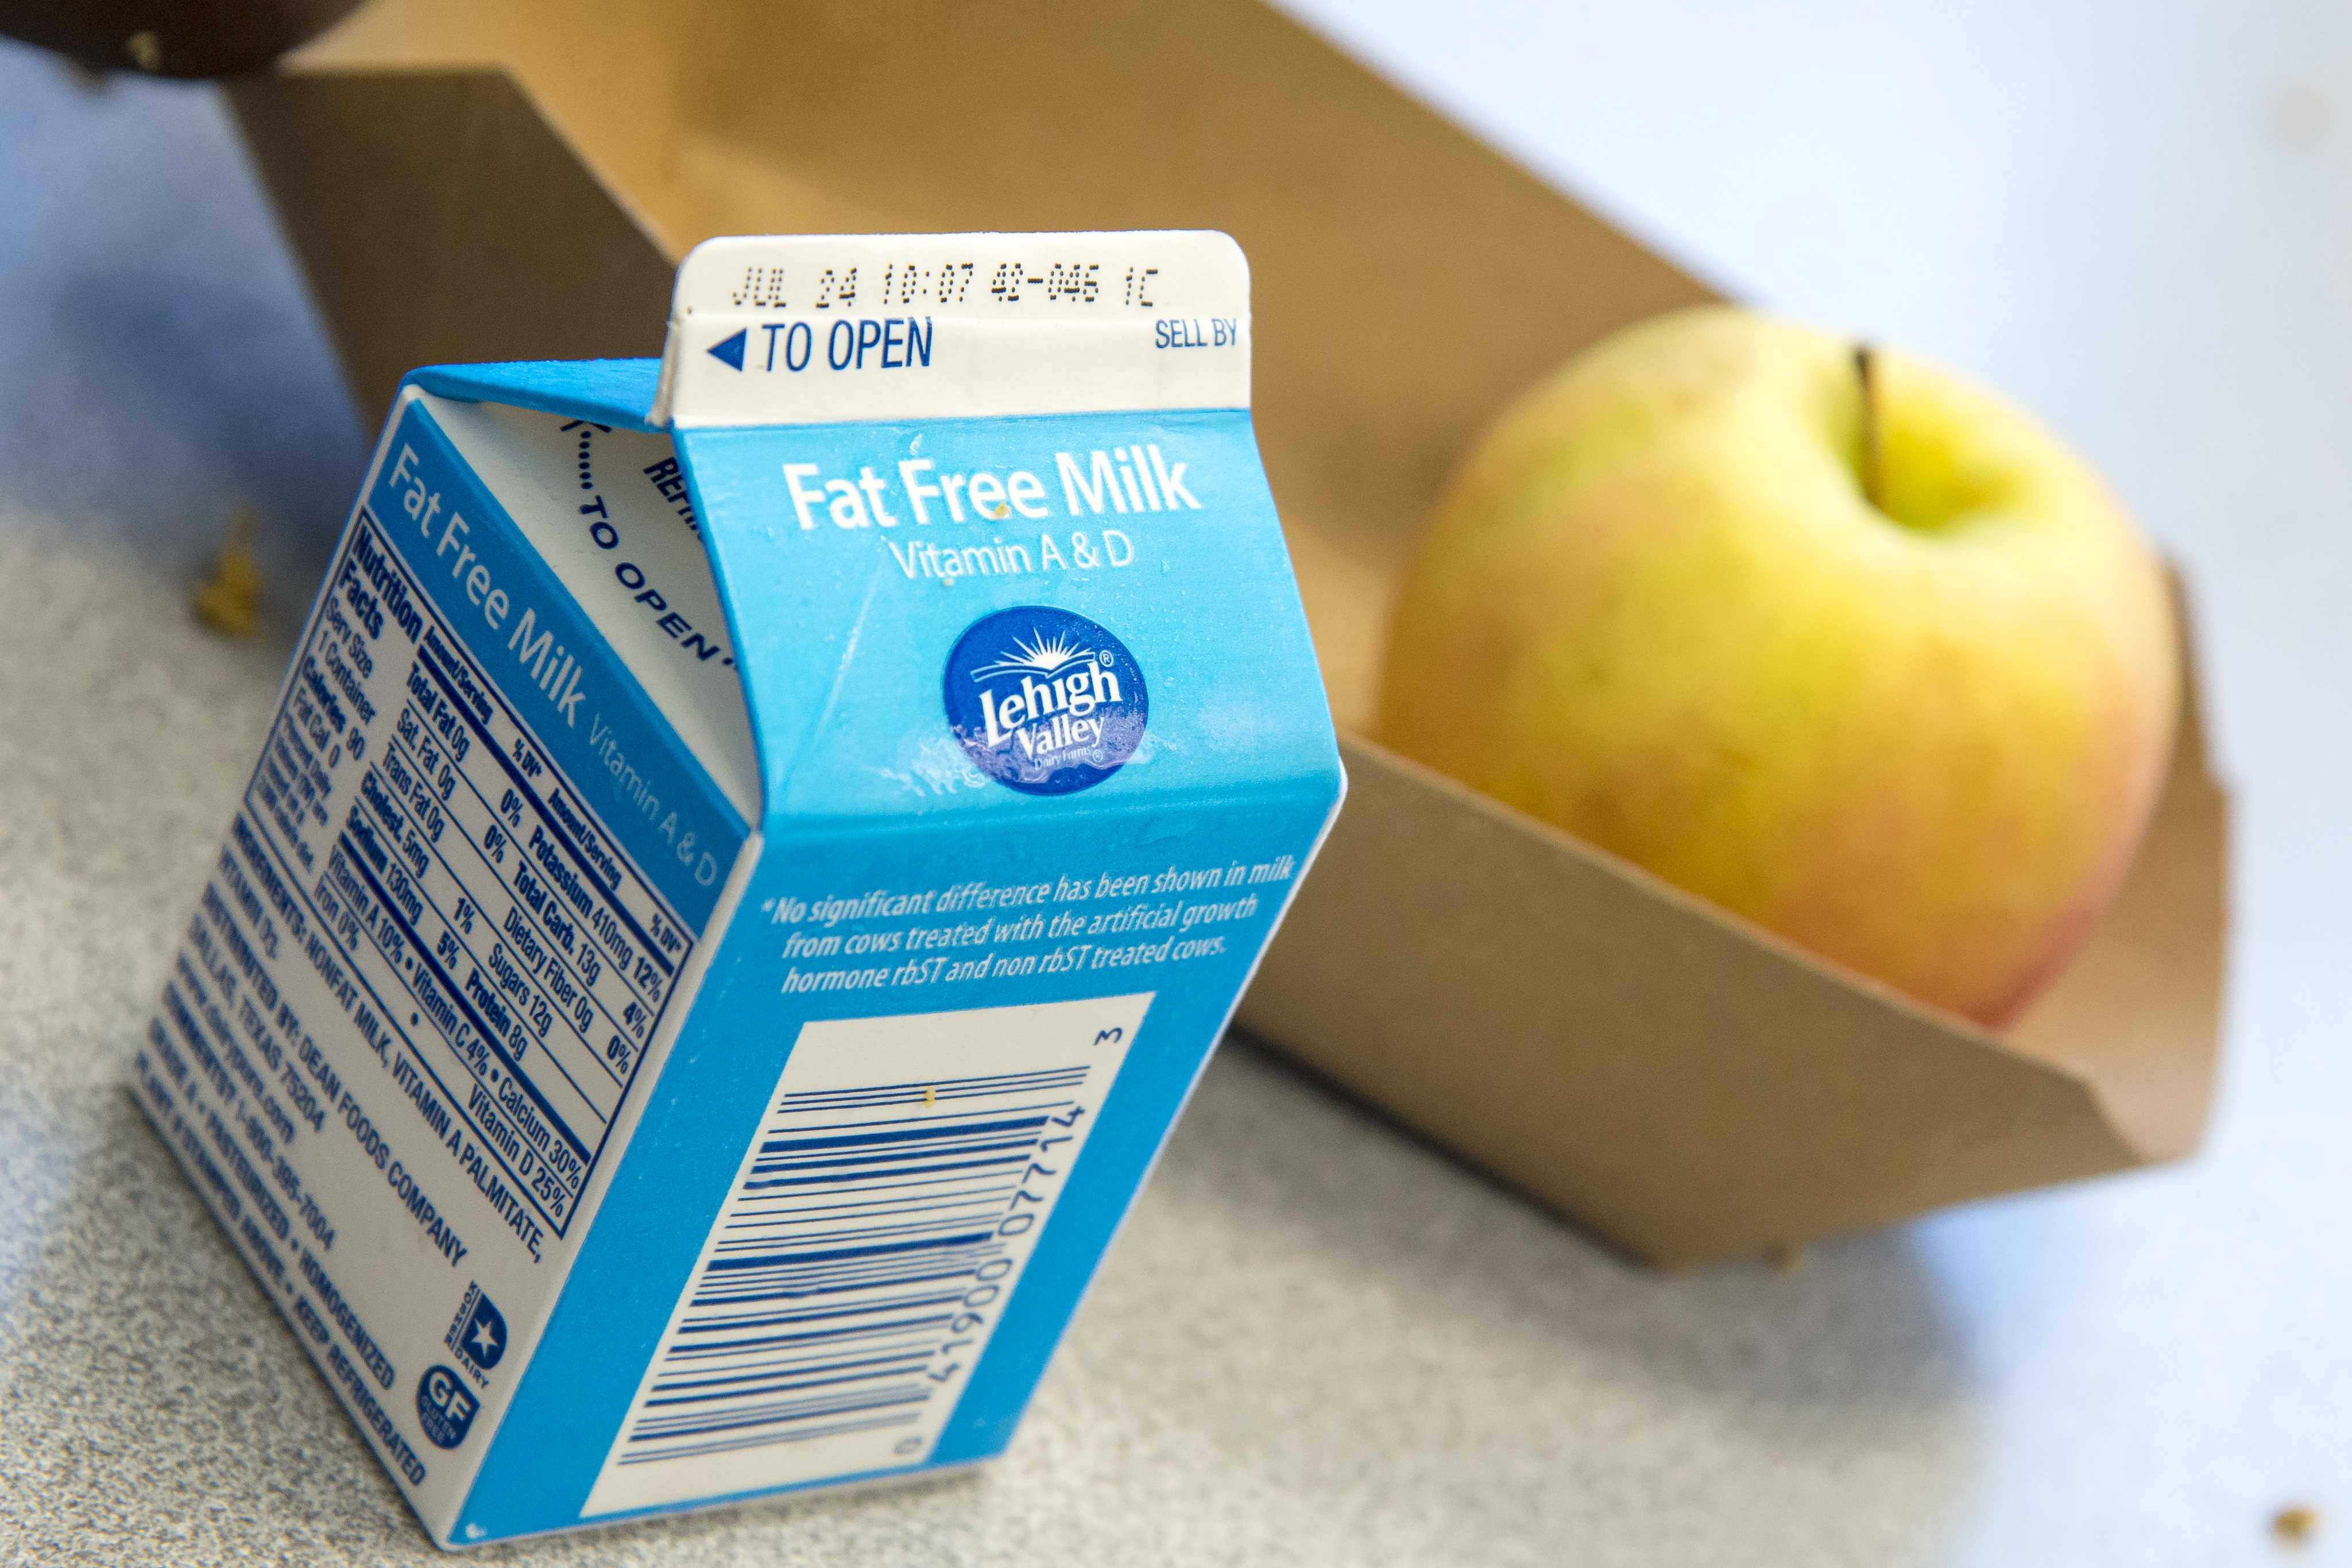 photograph of a milk carton that is a little larger than an apple